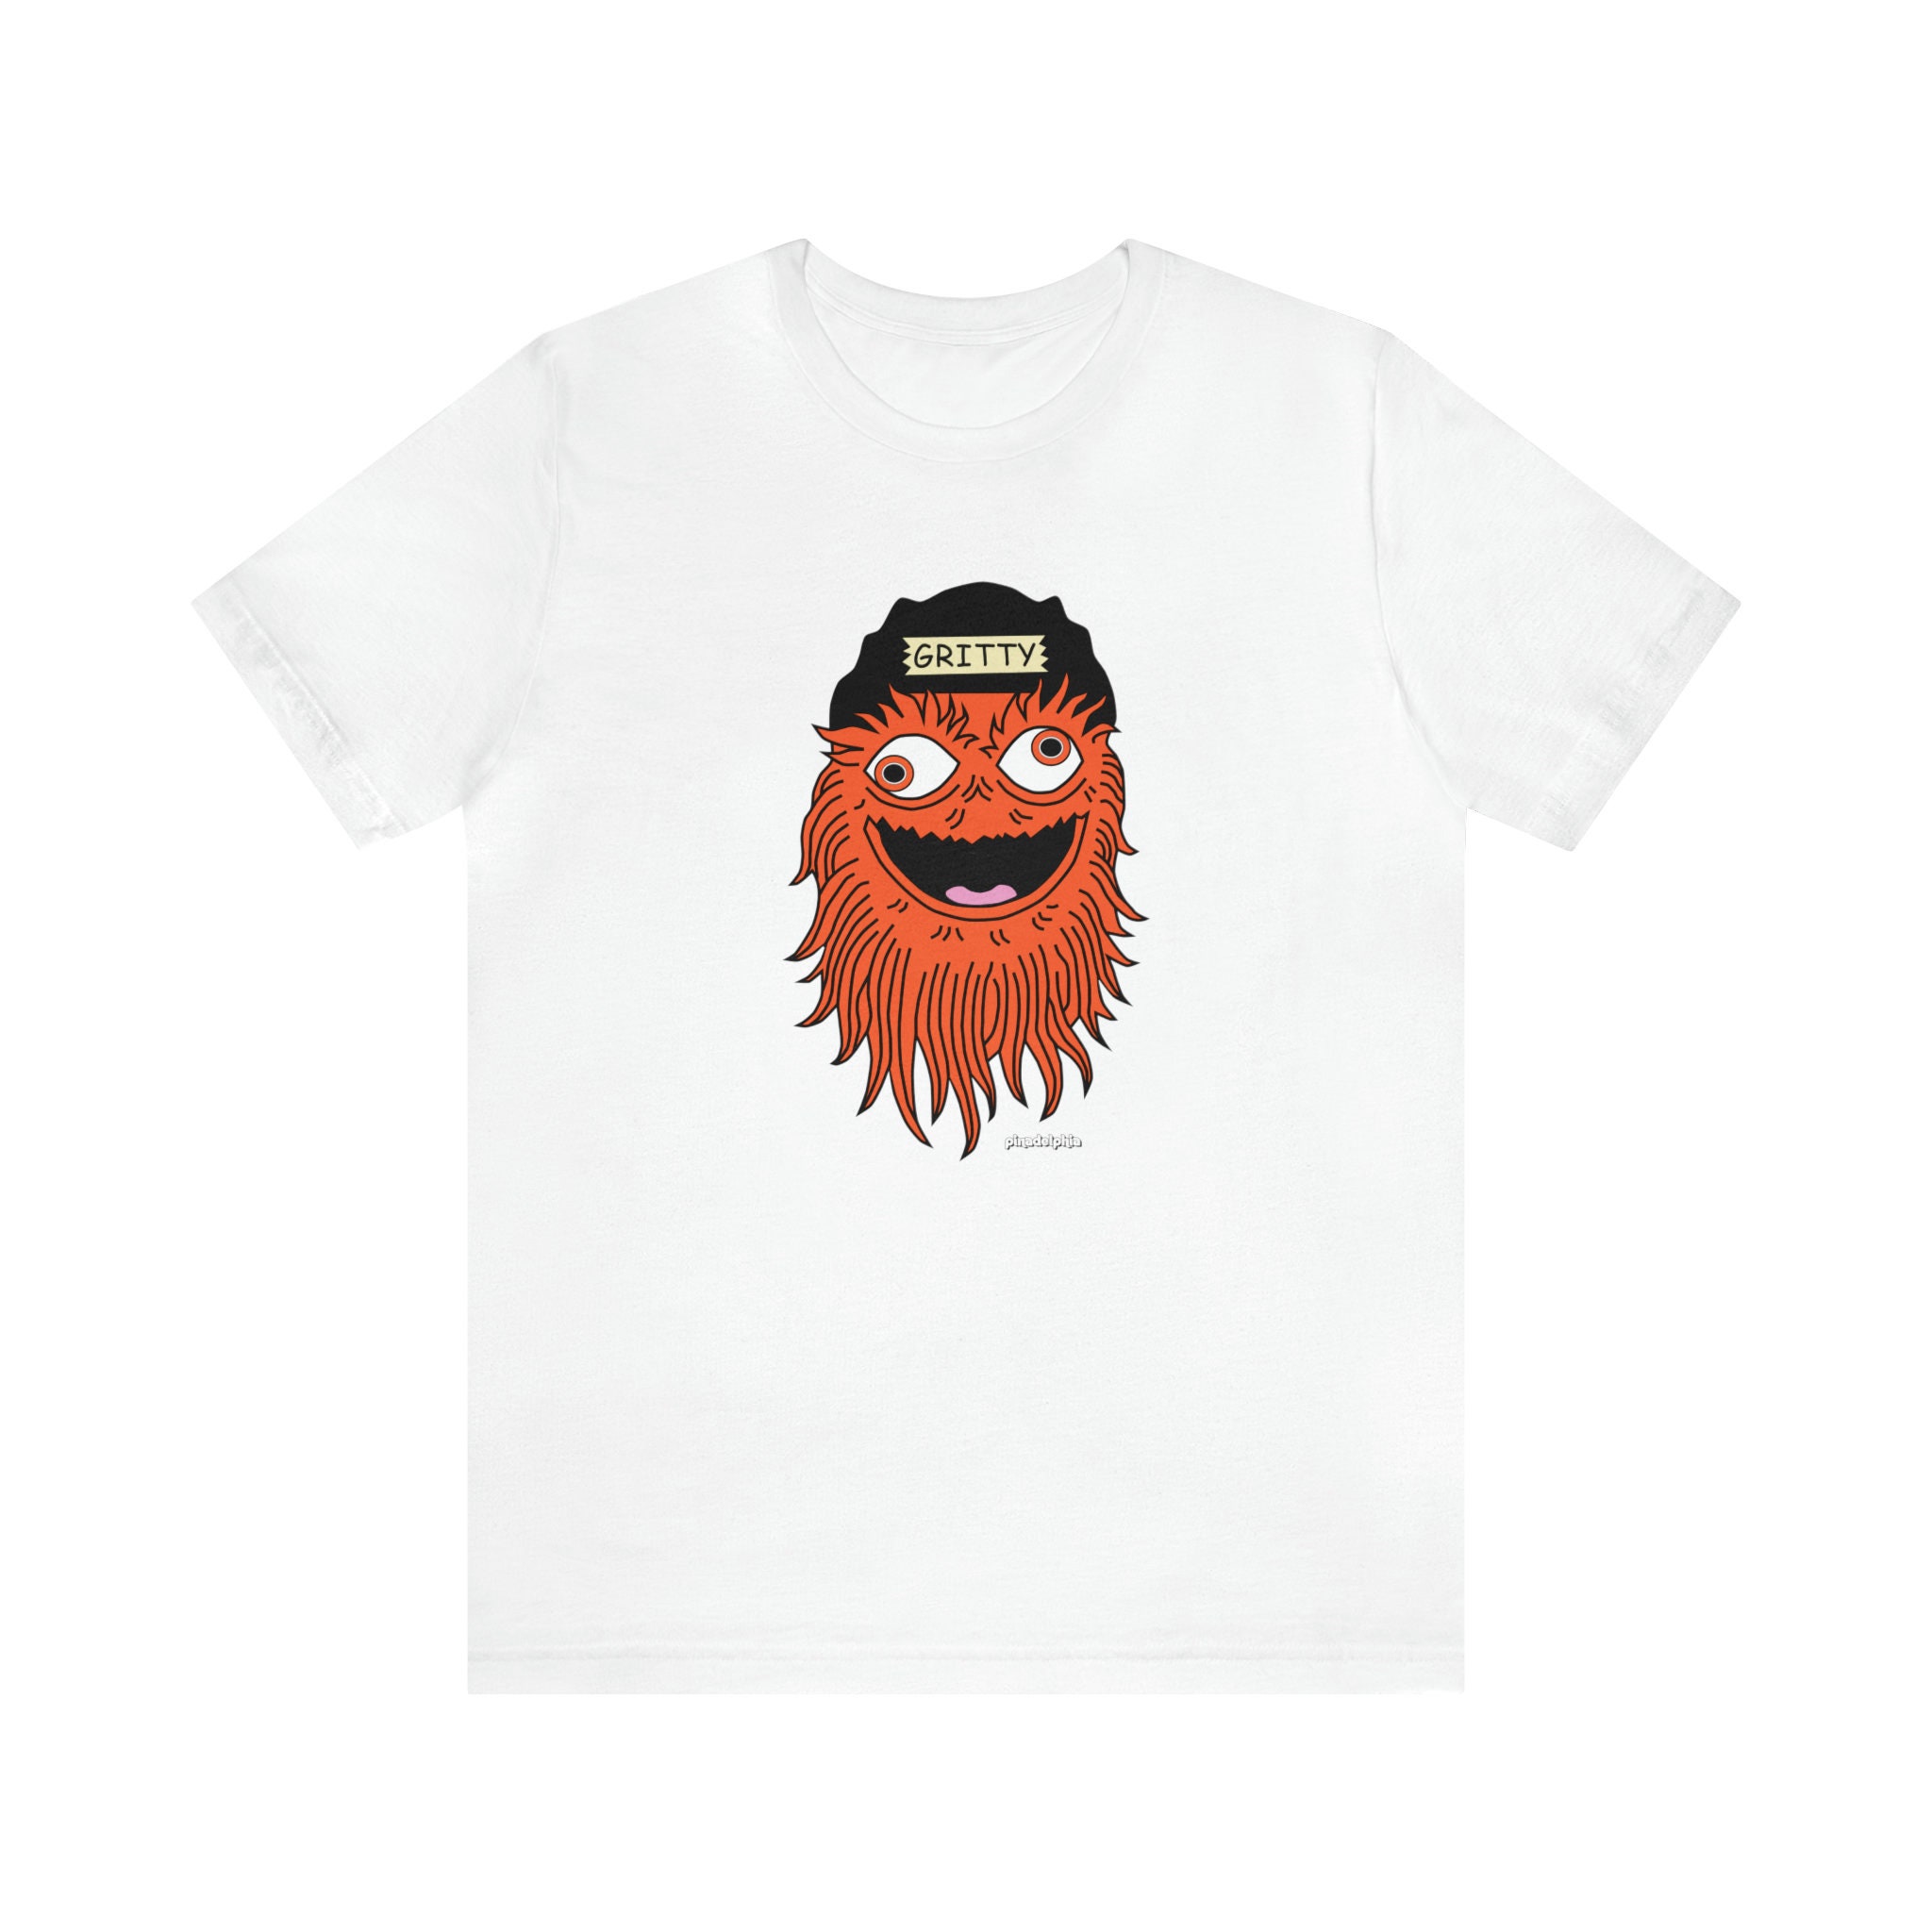 Philadelphia Flyers Adult Unisex Gritty Mascot T-Shirt S-3xl